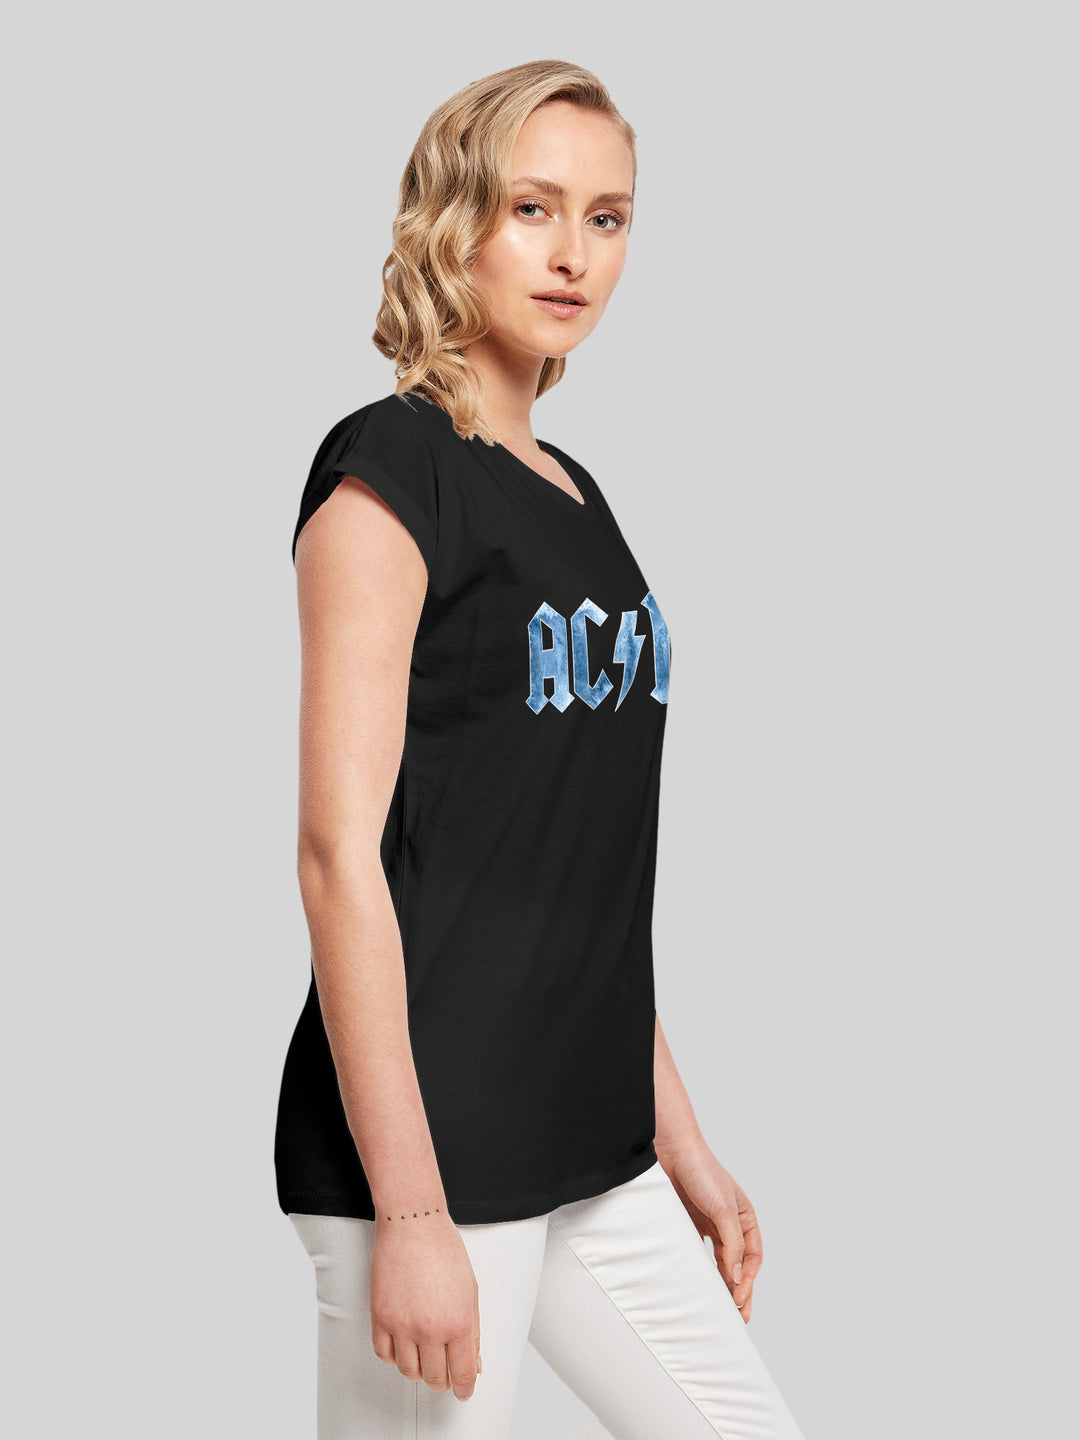 ACDC T-Shirt | Blue Ice Logo | Premium Kurzarm Damen T Shirt